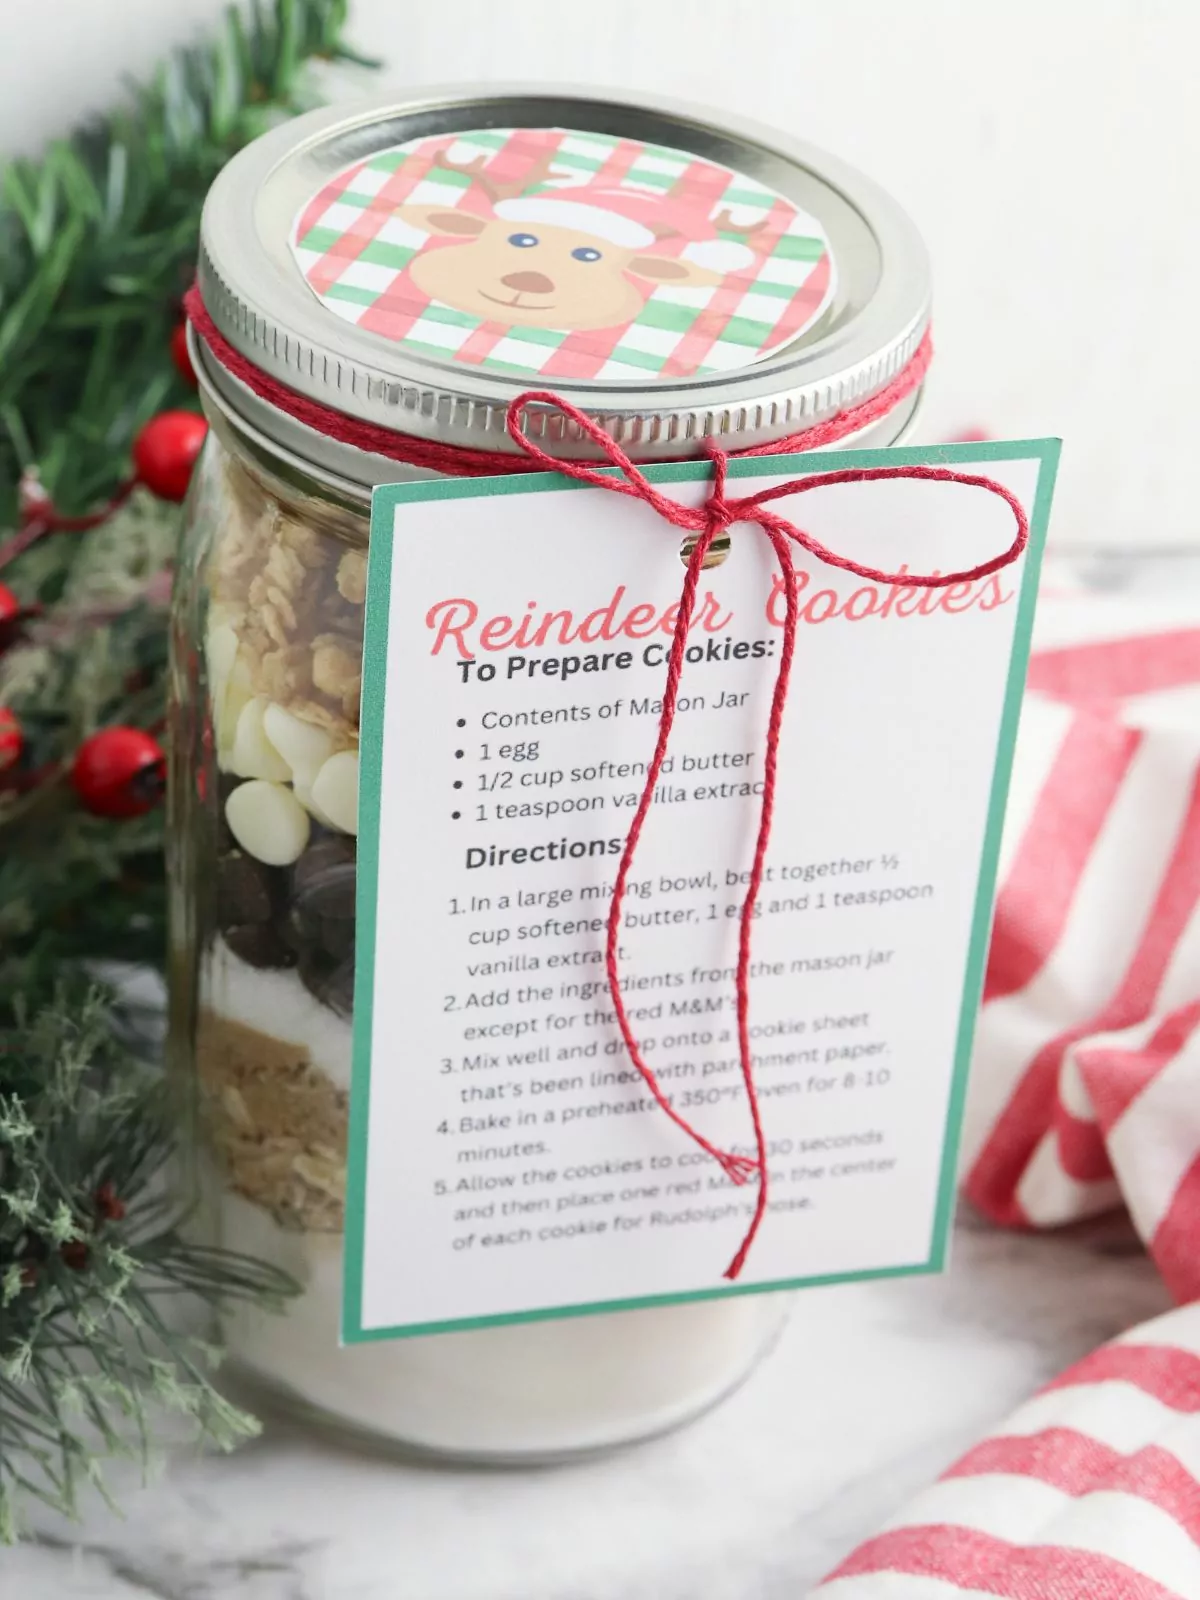 Reindeer cookies in a jar with label.